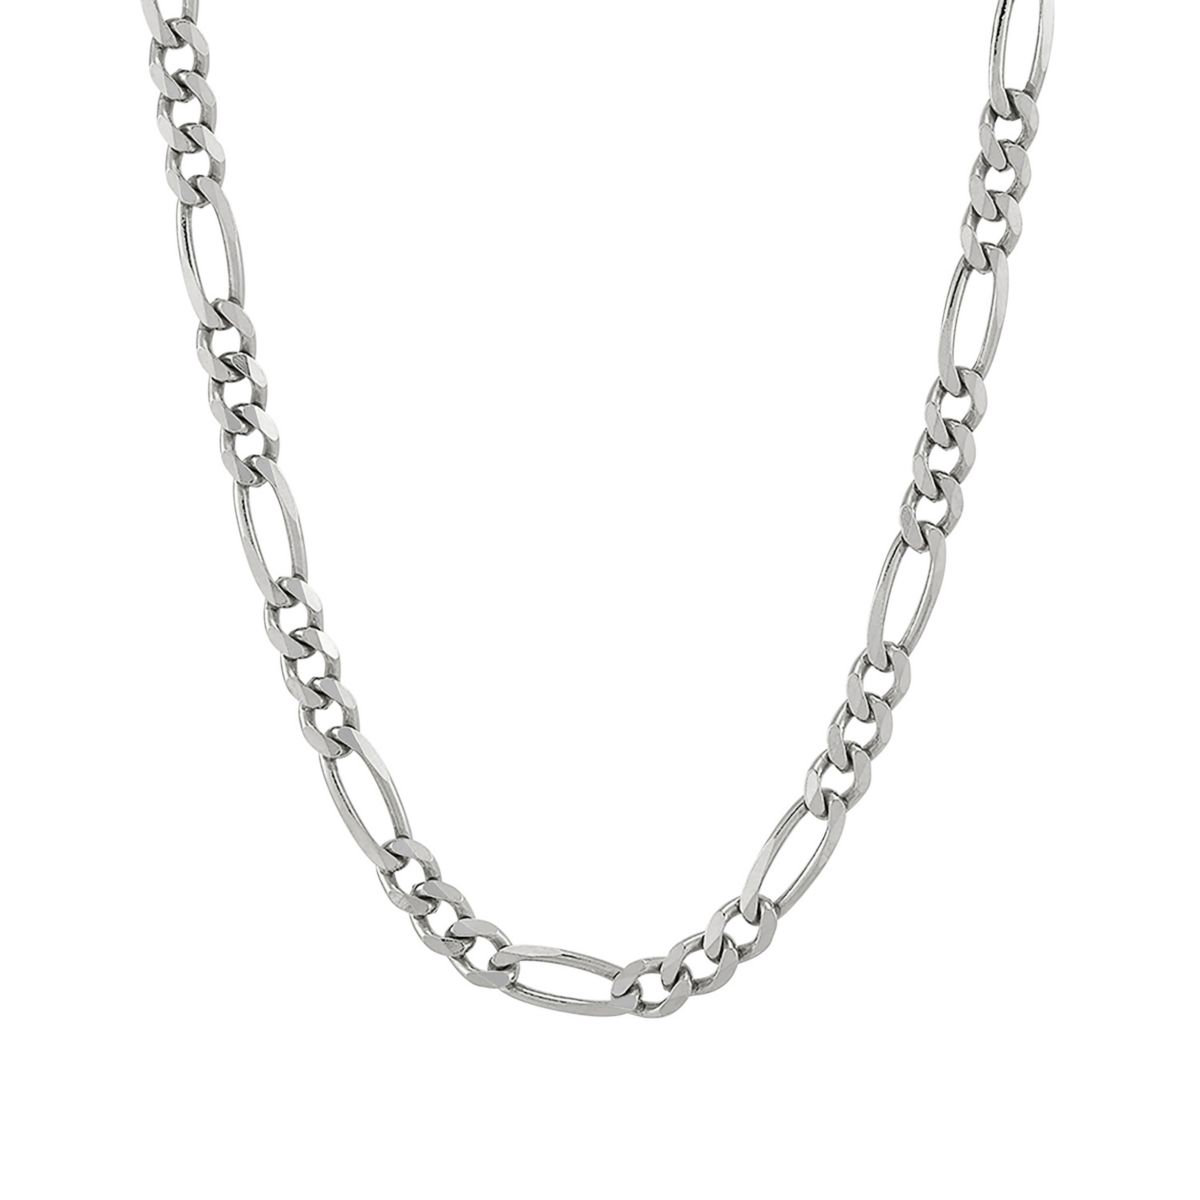 Ожерелье-цепочка Figaro из стерлингового серебра 4,3 мм - 18 дюймов. Unbranded